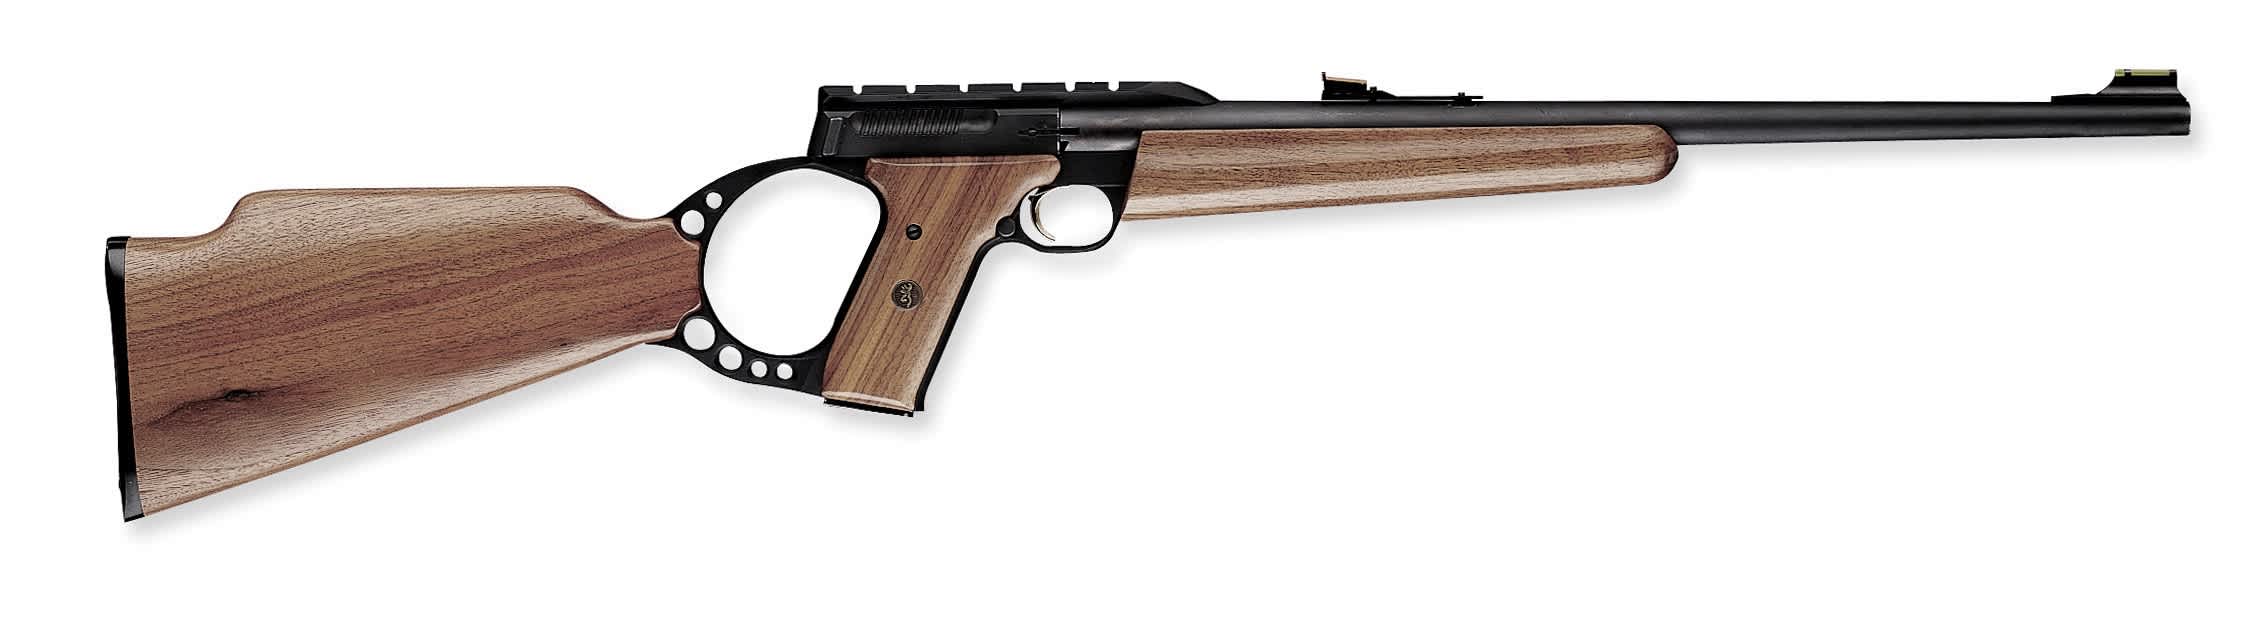 Browning Buck Mark Rifle